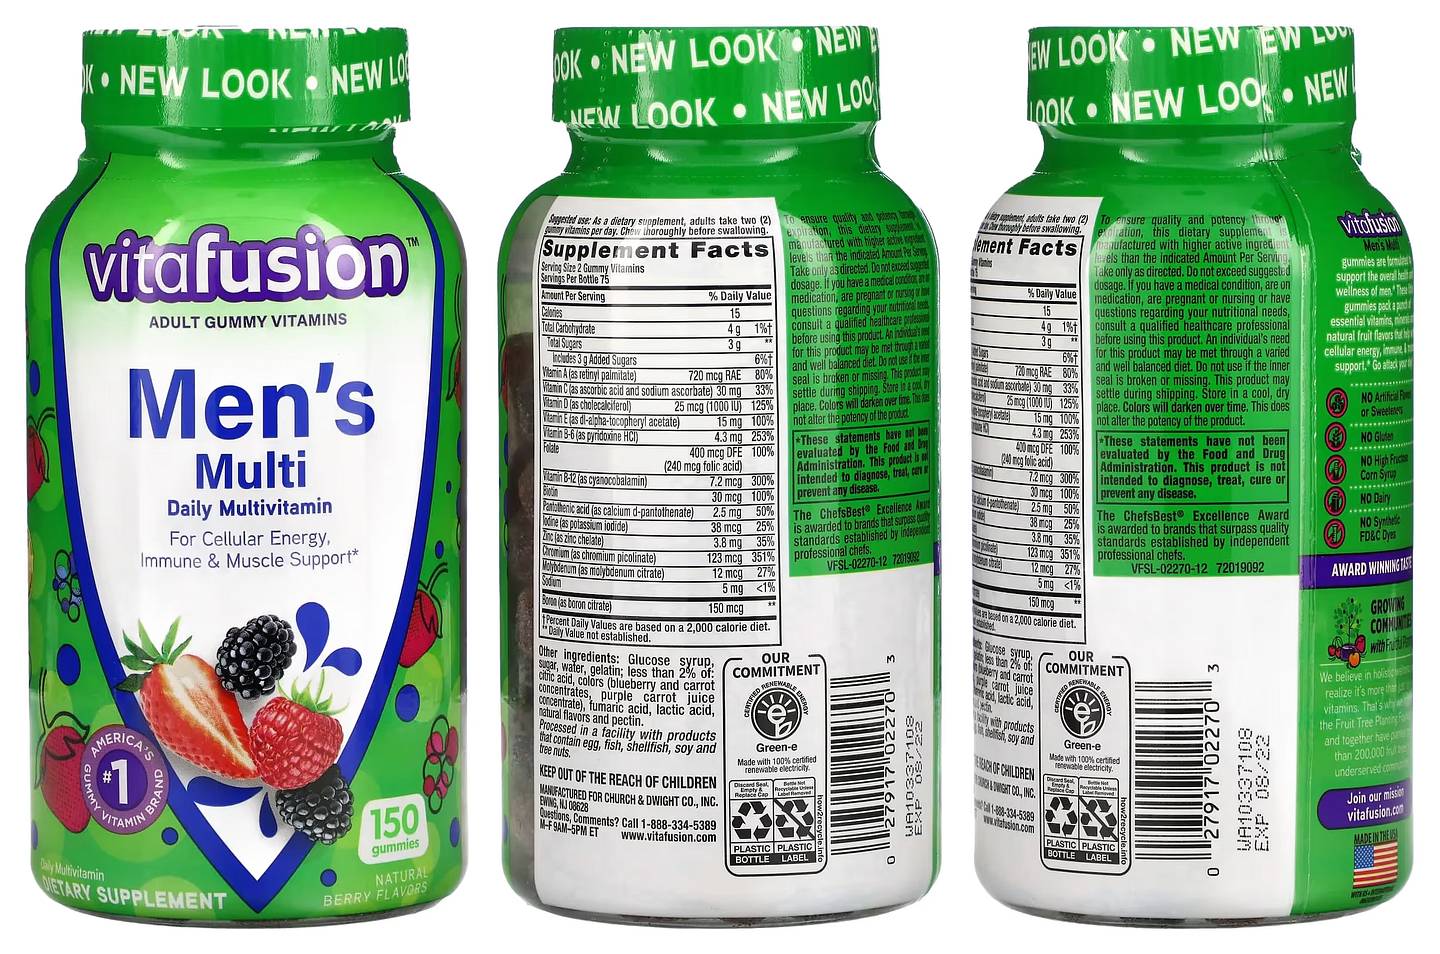 VitaFusion, Men's Multi, Daily Multivitamin, Natural Berry packaging